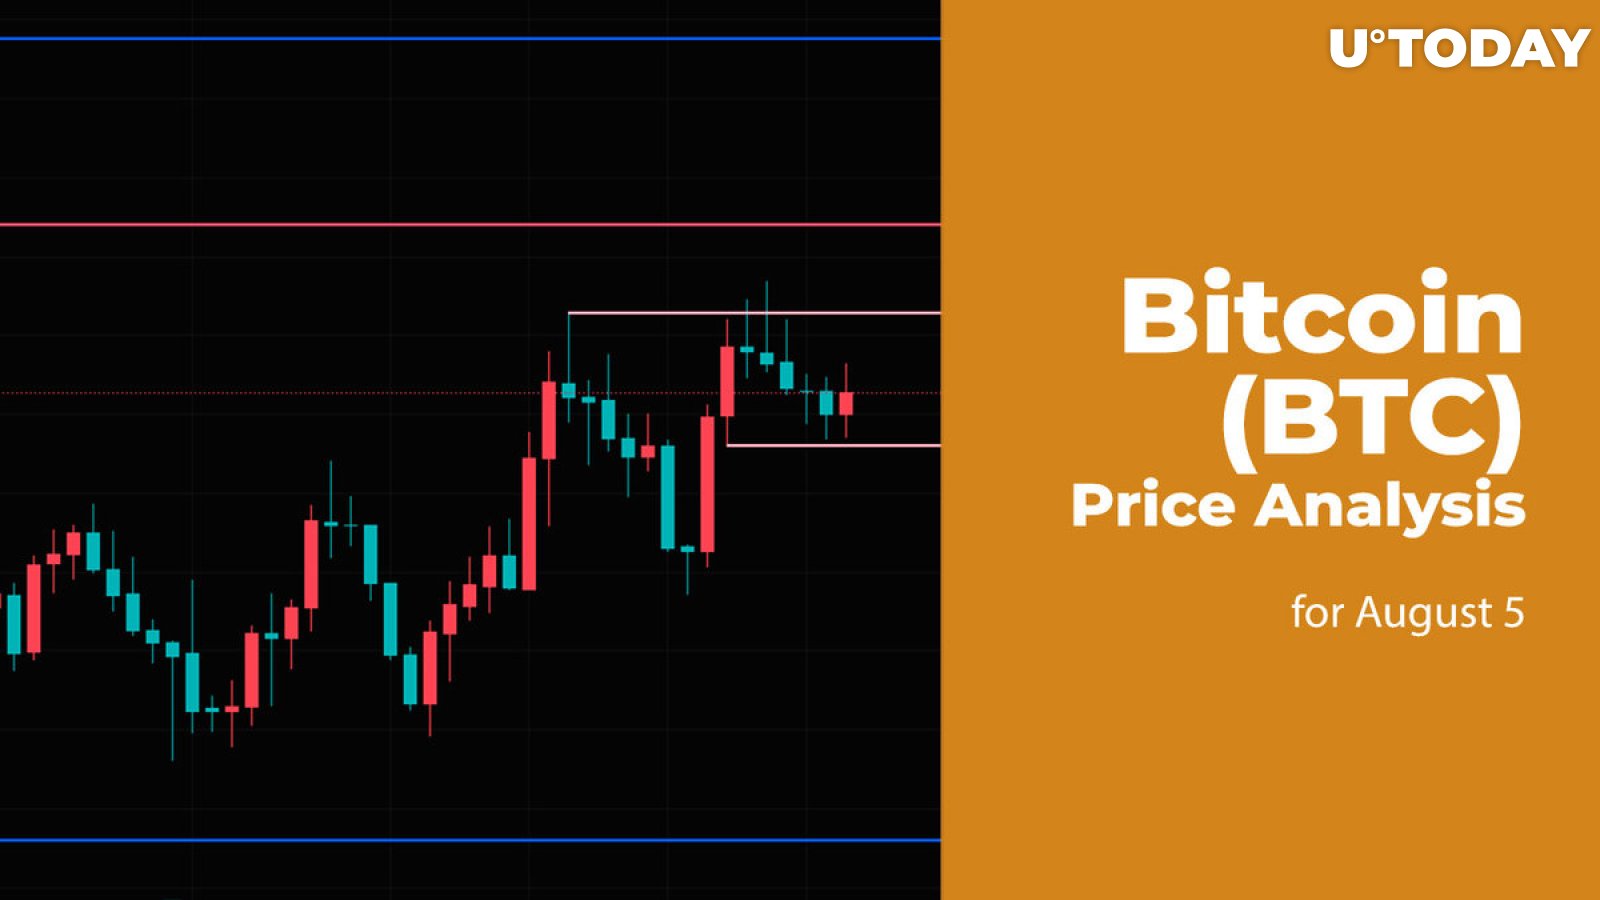 Bitcoin (BTC) Price Analysis for August 5